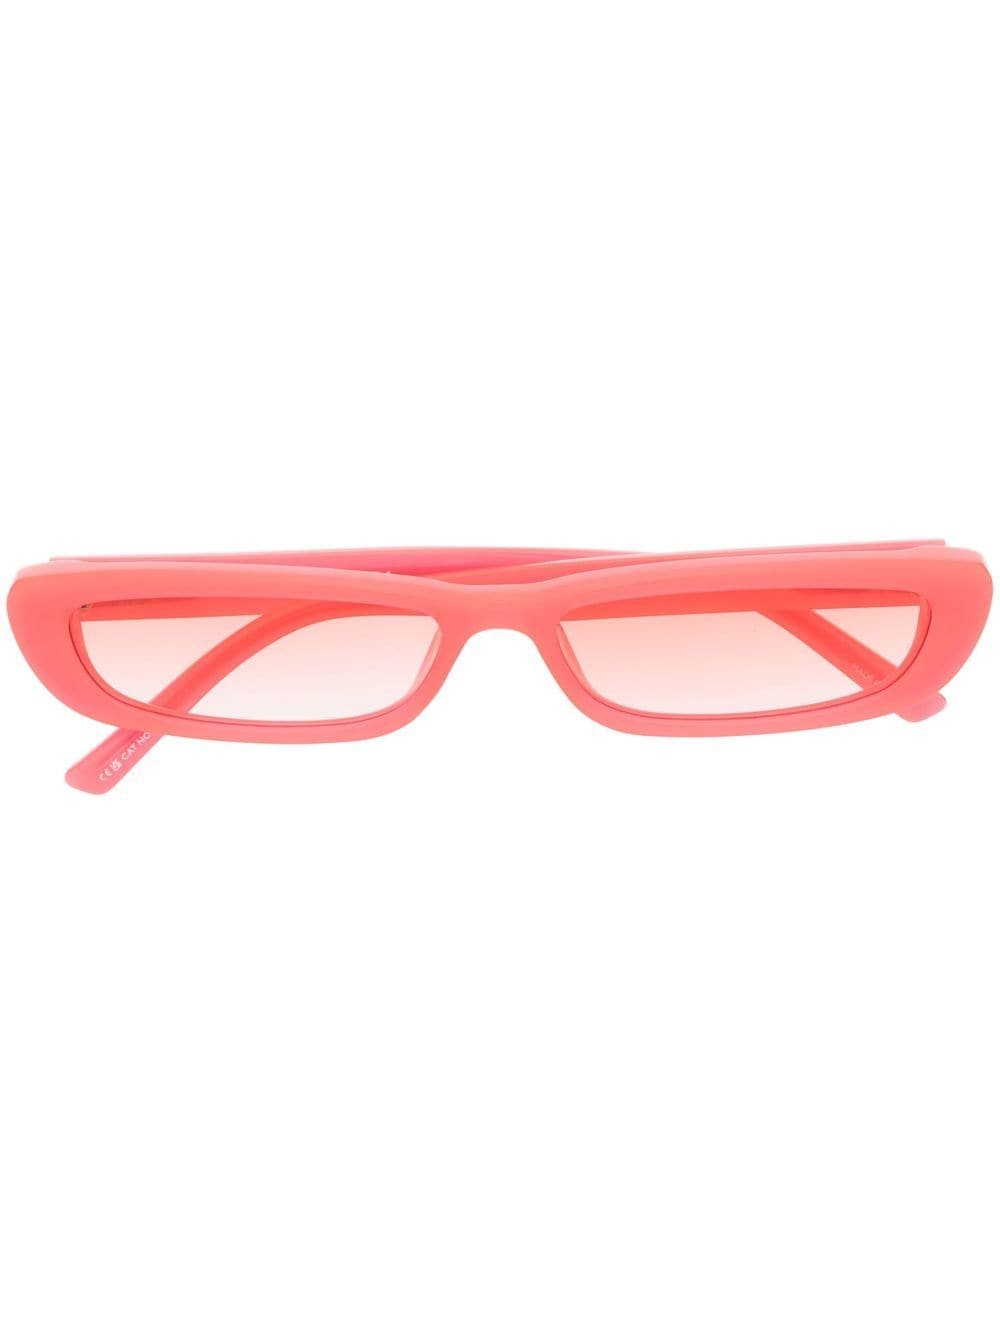 Image 1 of Linda Farrow x The Attico narrow-frame sunglasses